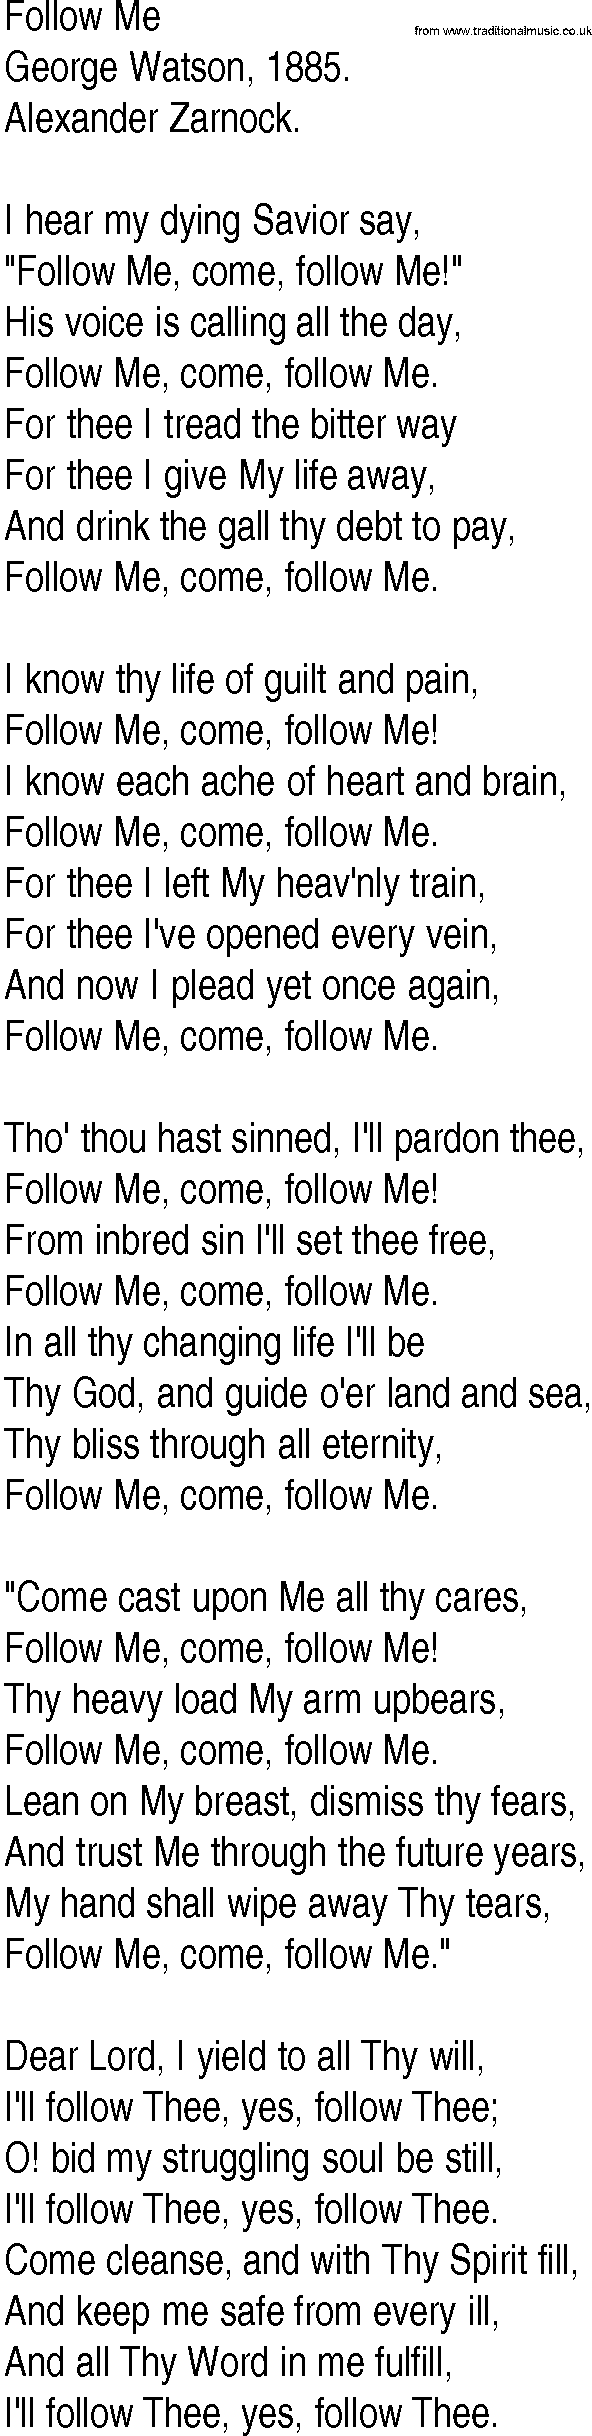 Hymn and Gospel Song: Follow Me by George Watson lyrics